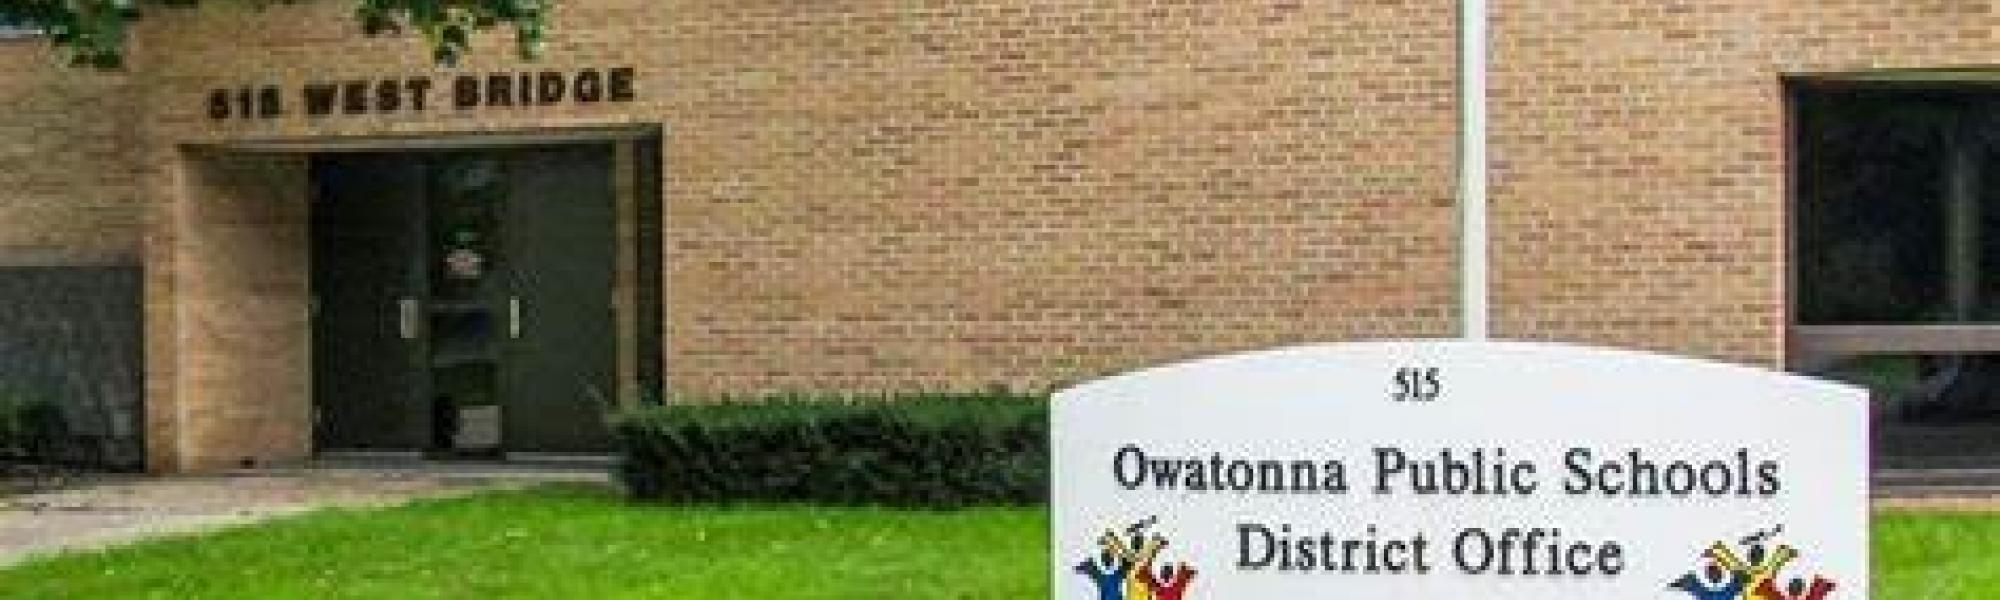 Owatonna Public Schools District Office